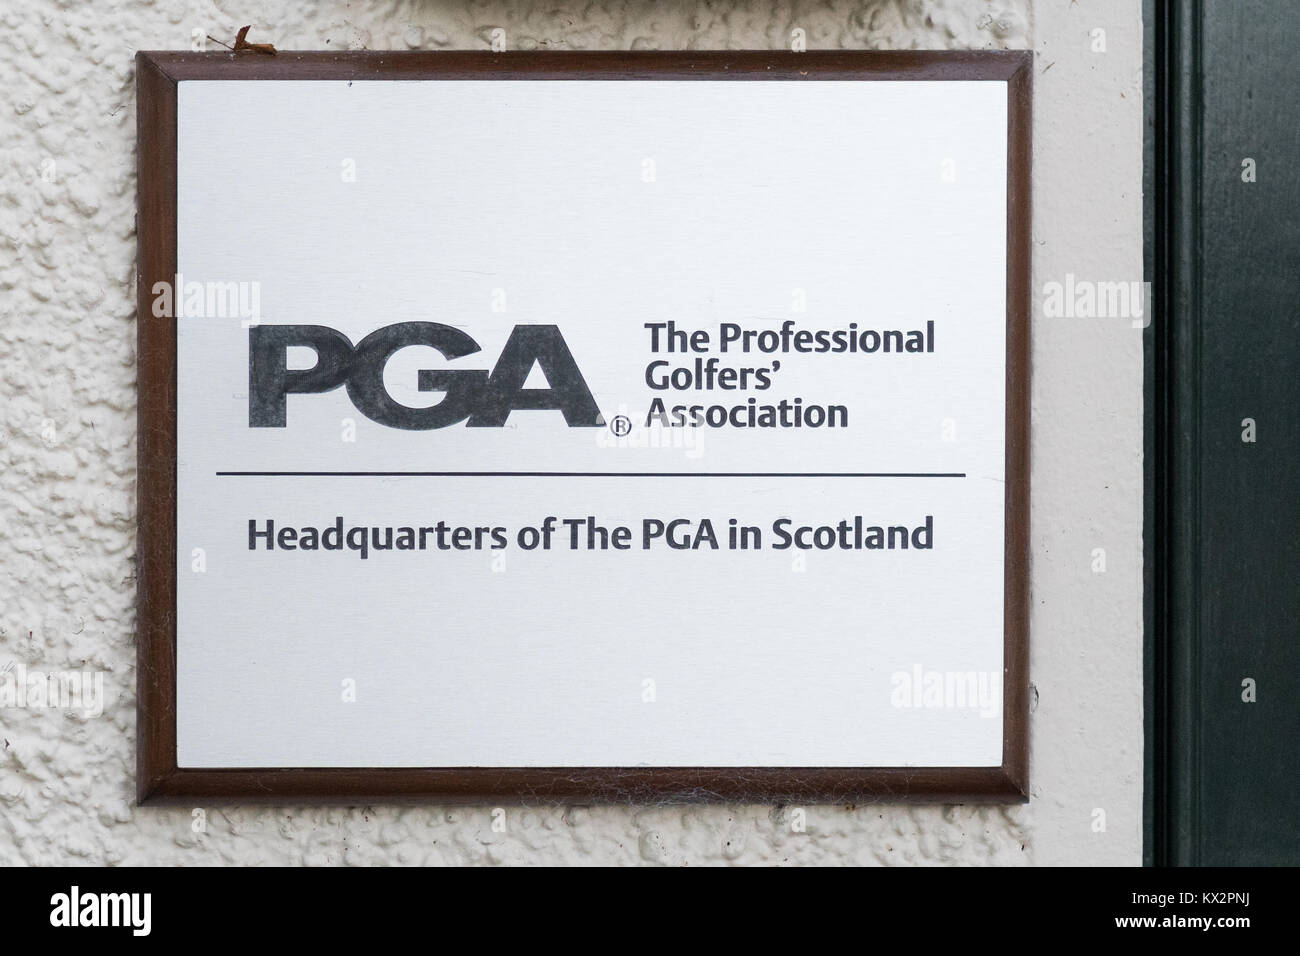 The PGA - Professional Golfers' Association headquarters at Gleneagles, Scotland, UK Stock Photo